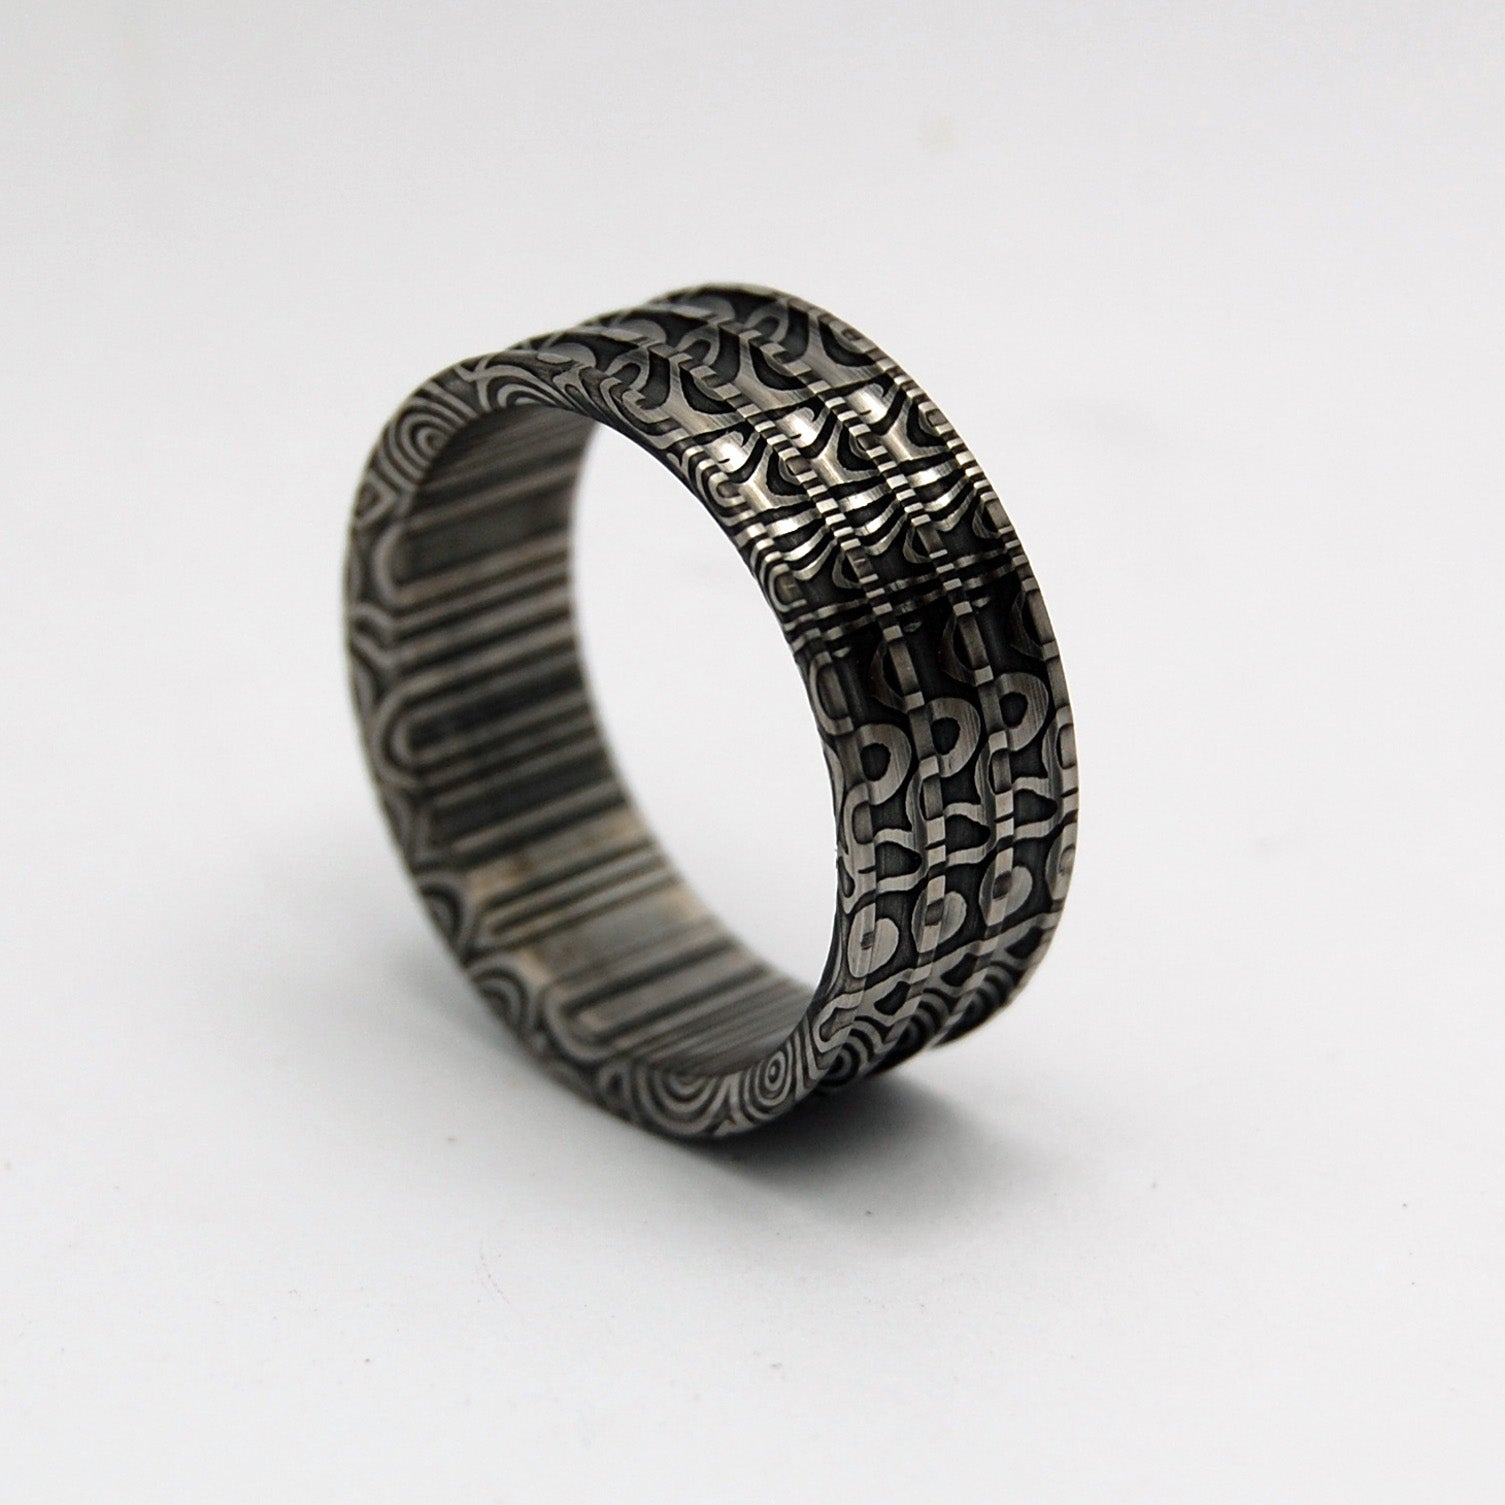 CREATIVE MAN | Damasteel Damascus Steel Wedding Rings - Minter and Richter Designs